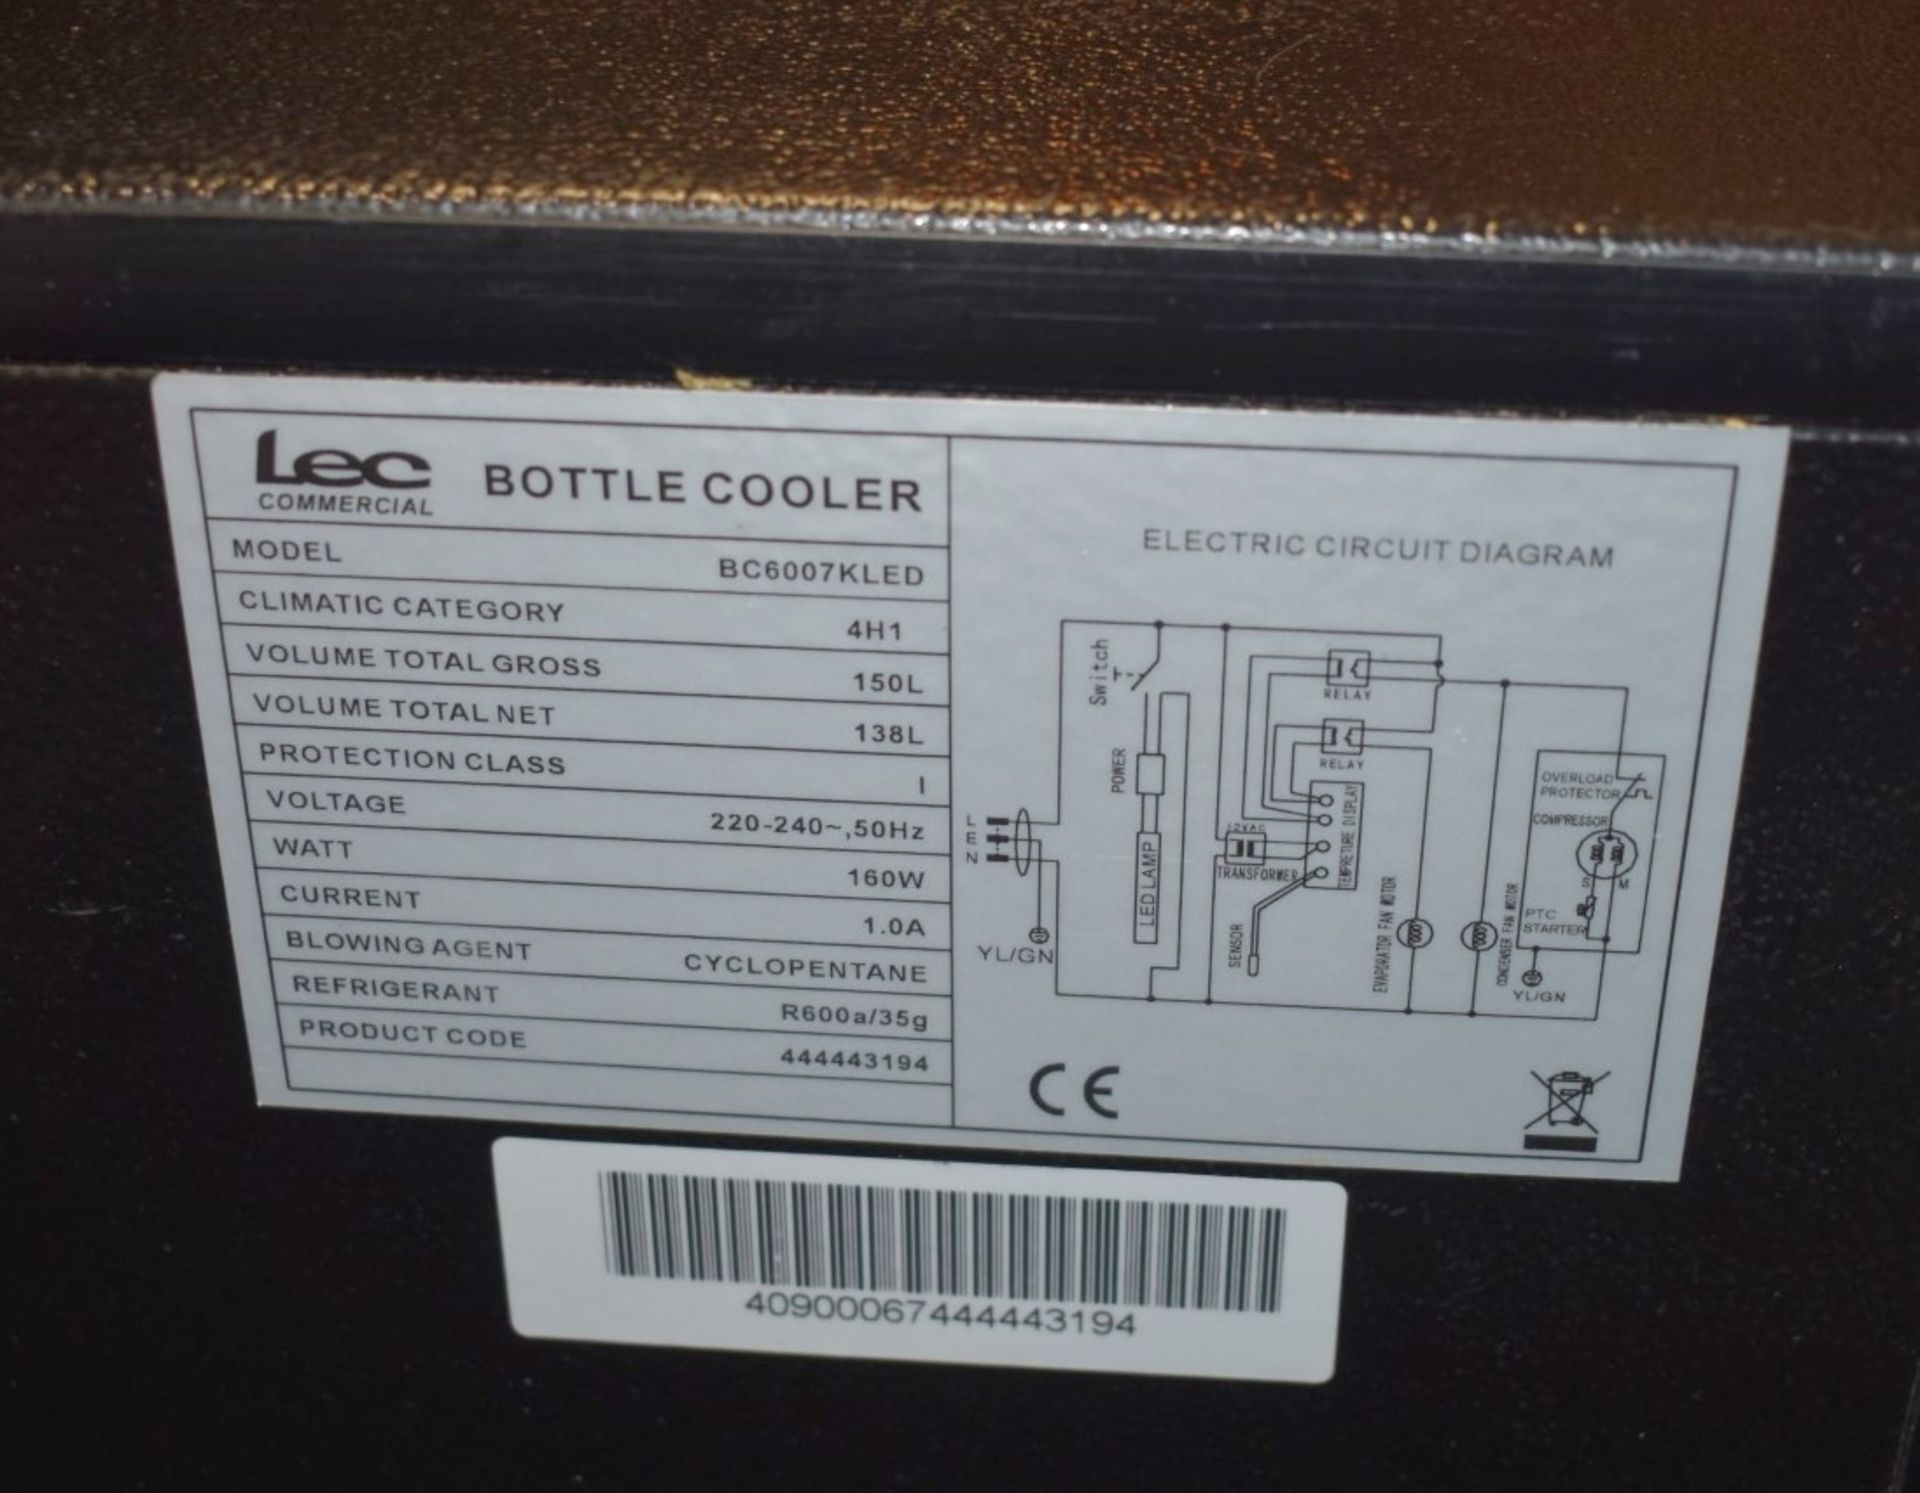 1 x LEC Single Door Backbar Bottle Cooler With Frosted Glass Display Door - Model BC6007KLED - Image 4 of 6